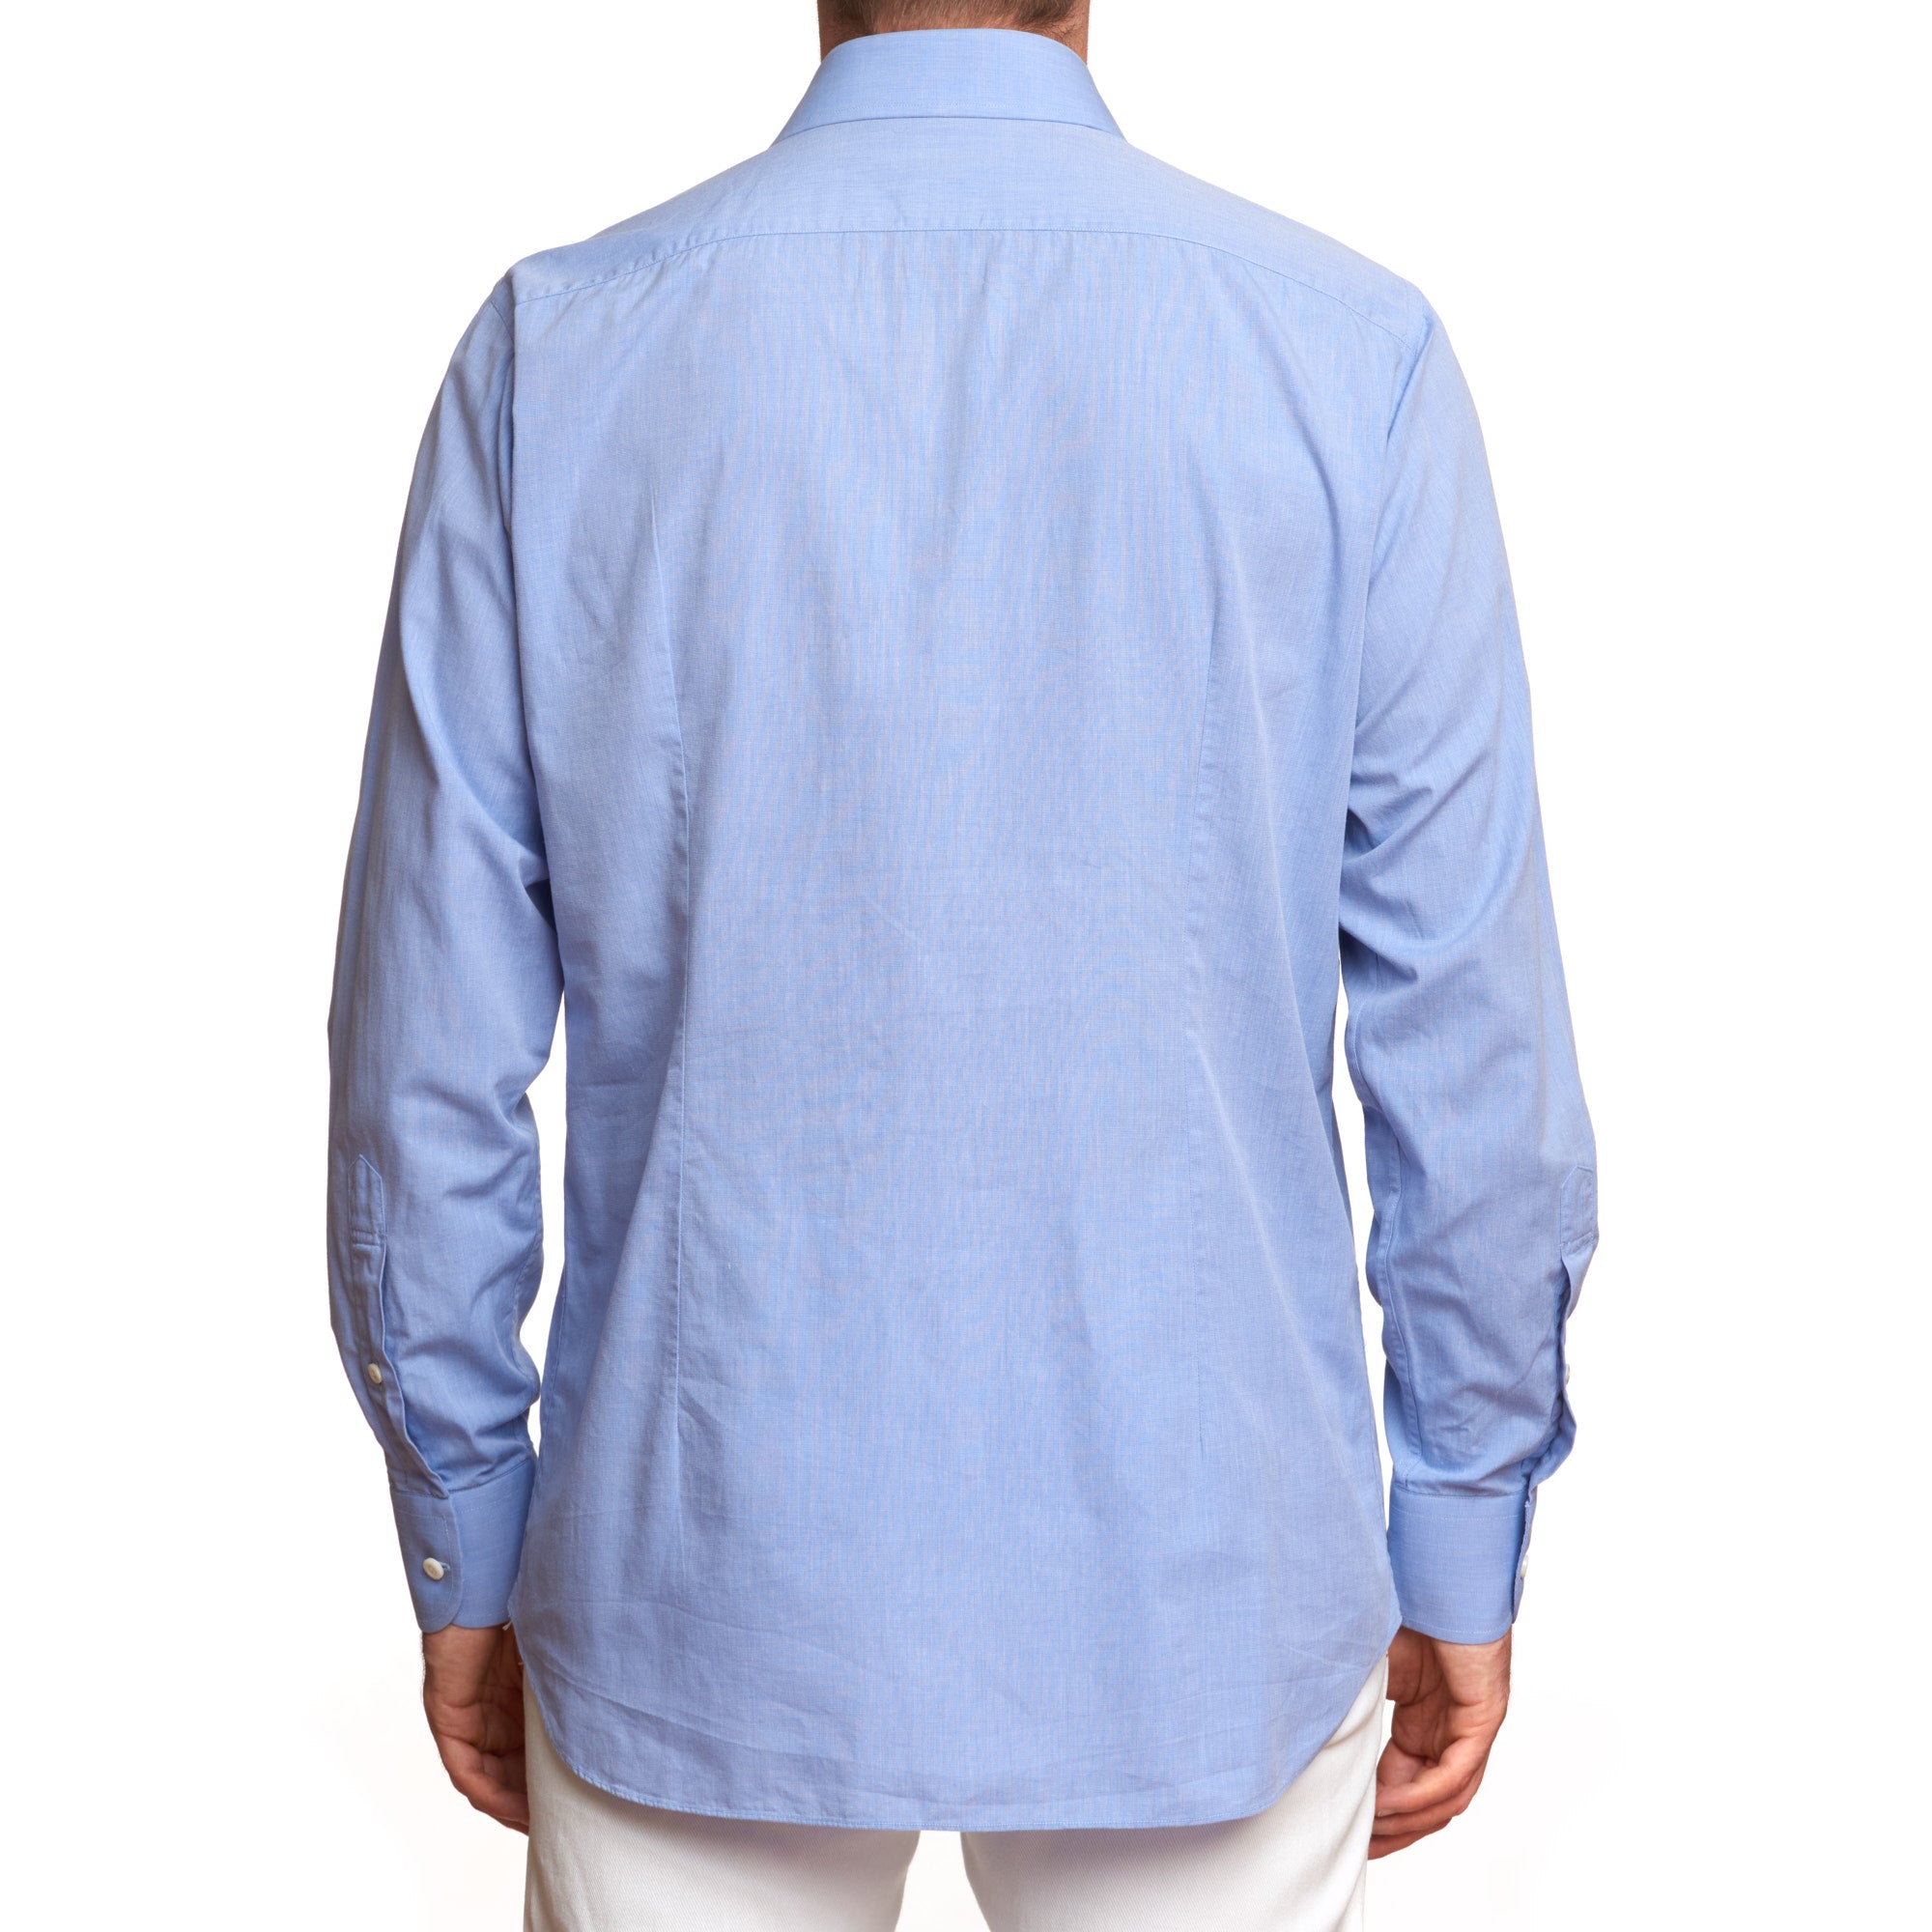 BESPOKE ATHENS Blue Cotton End-on-End Dress Shirt EU L US 16 Classic BESPOKE ATHENS